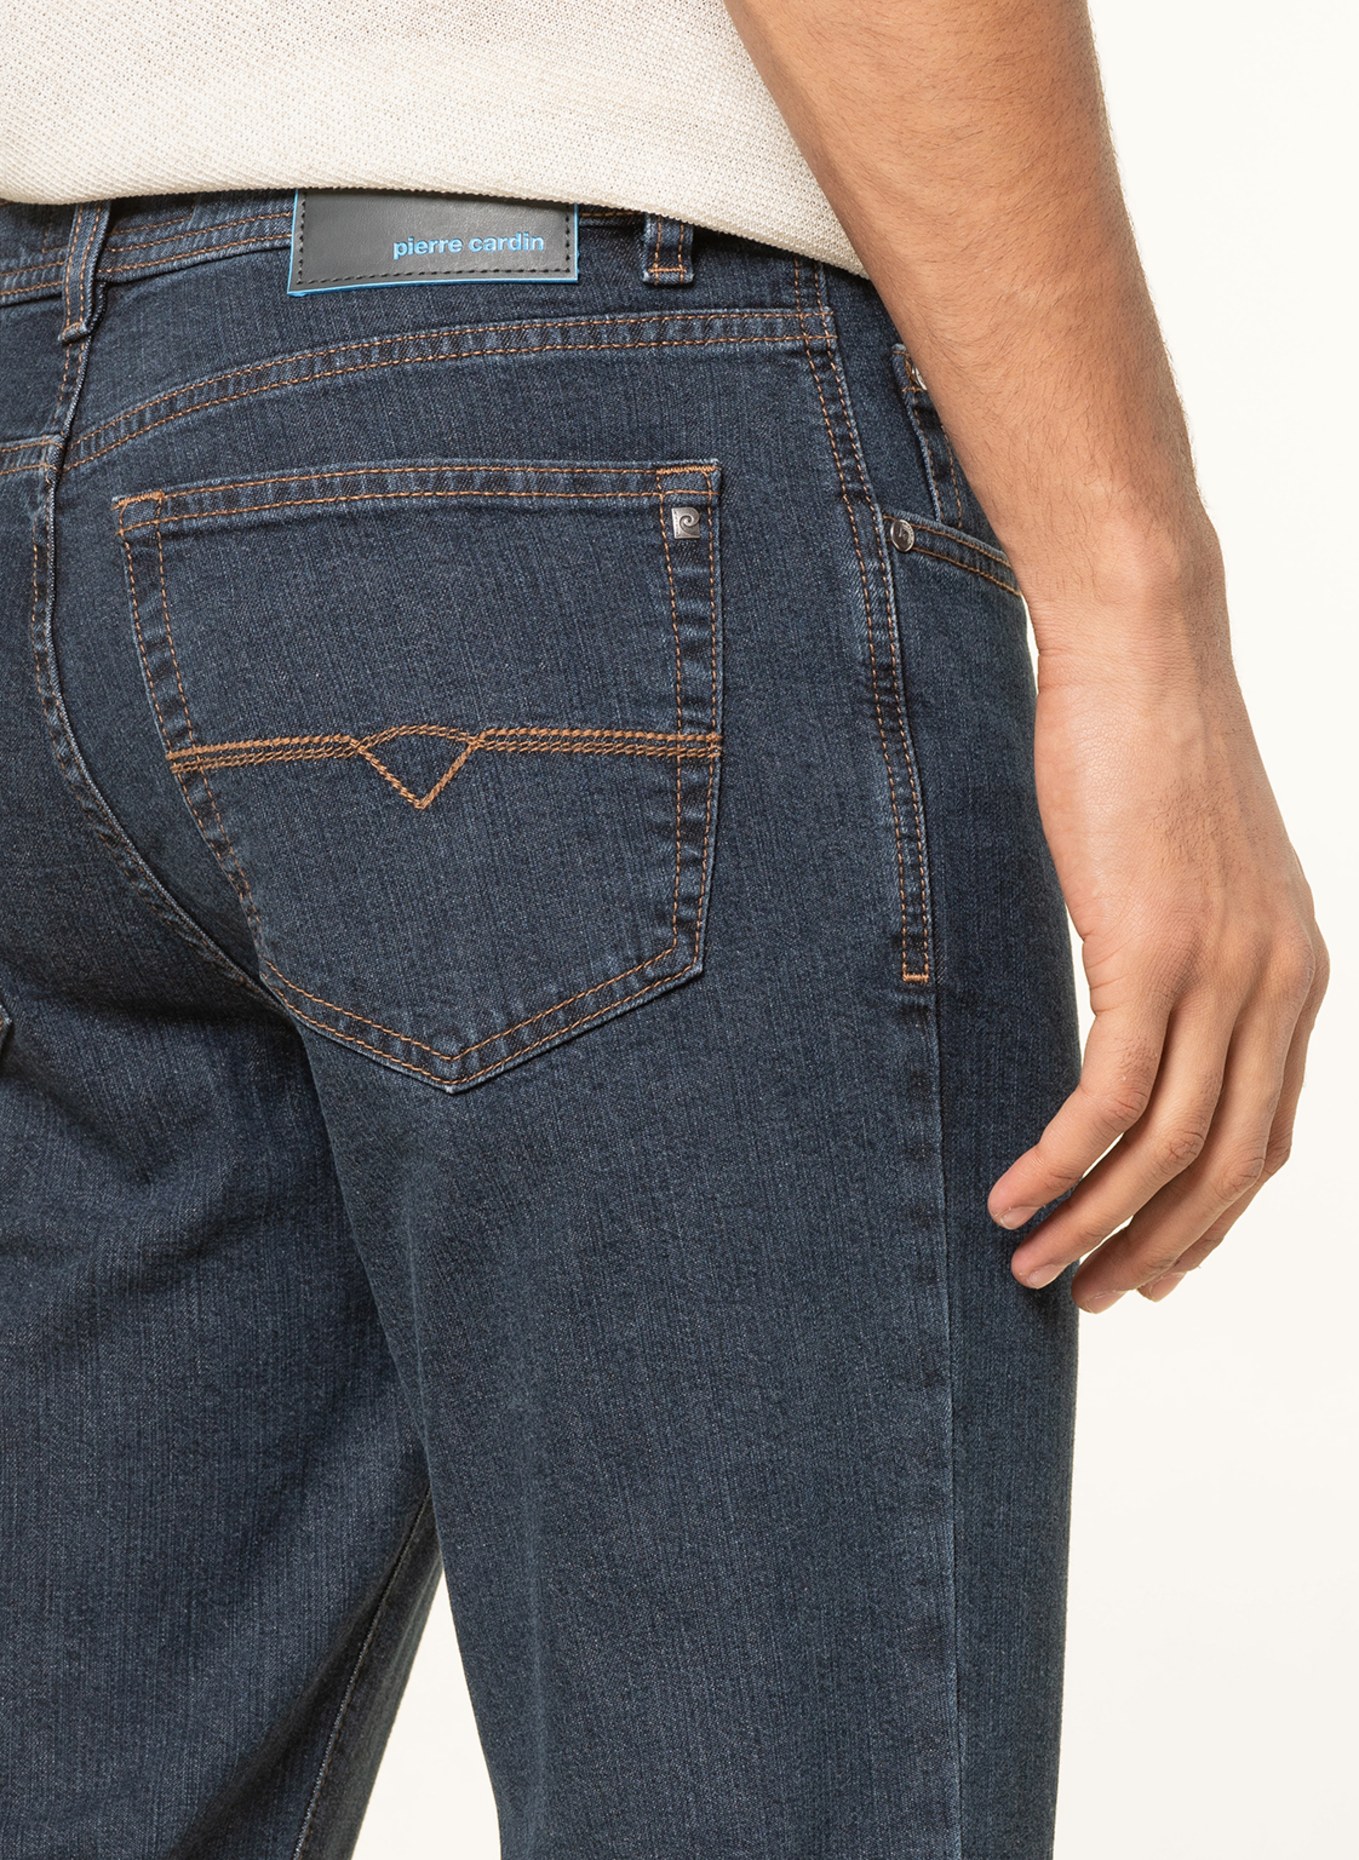 pierre cardin Jeans DIJON Comfort Fit , Farbe: 6811 dark blue stonewash (Bild 5)